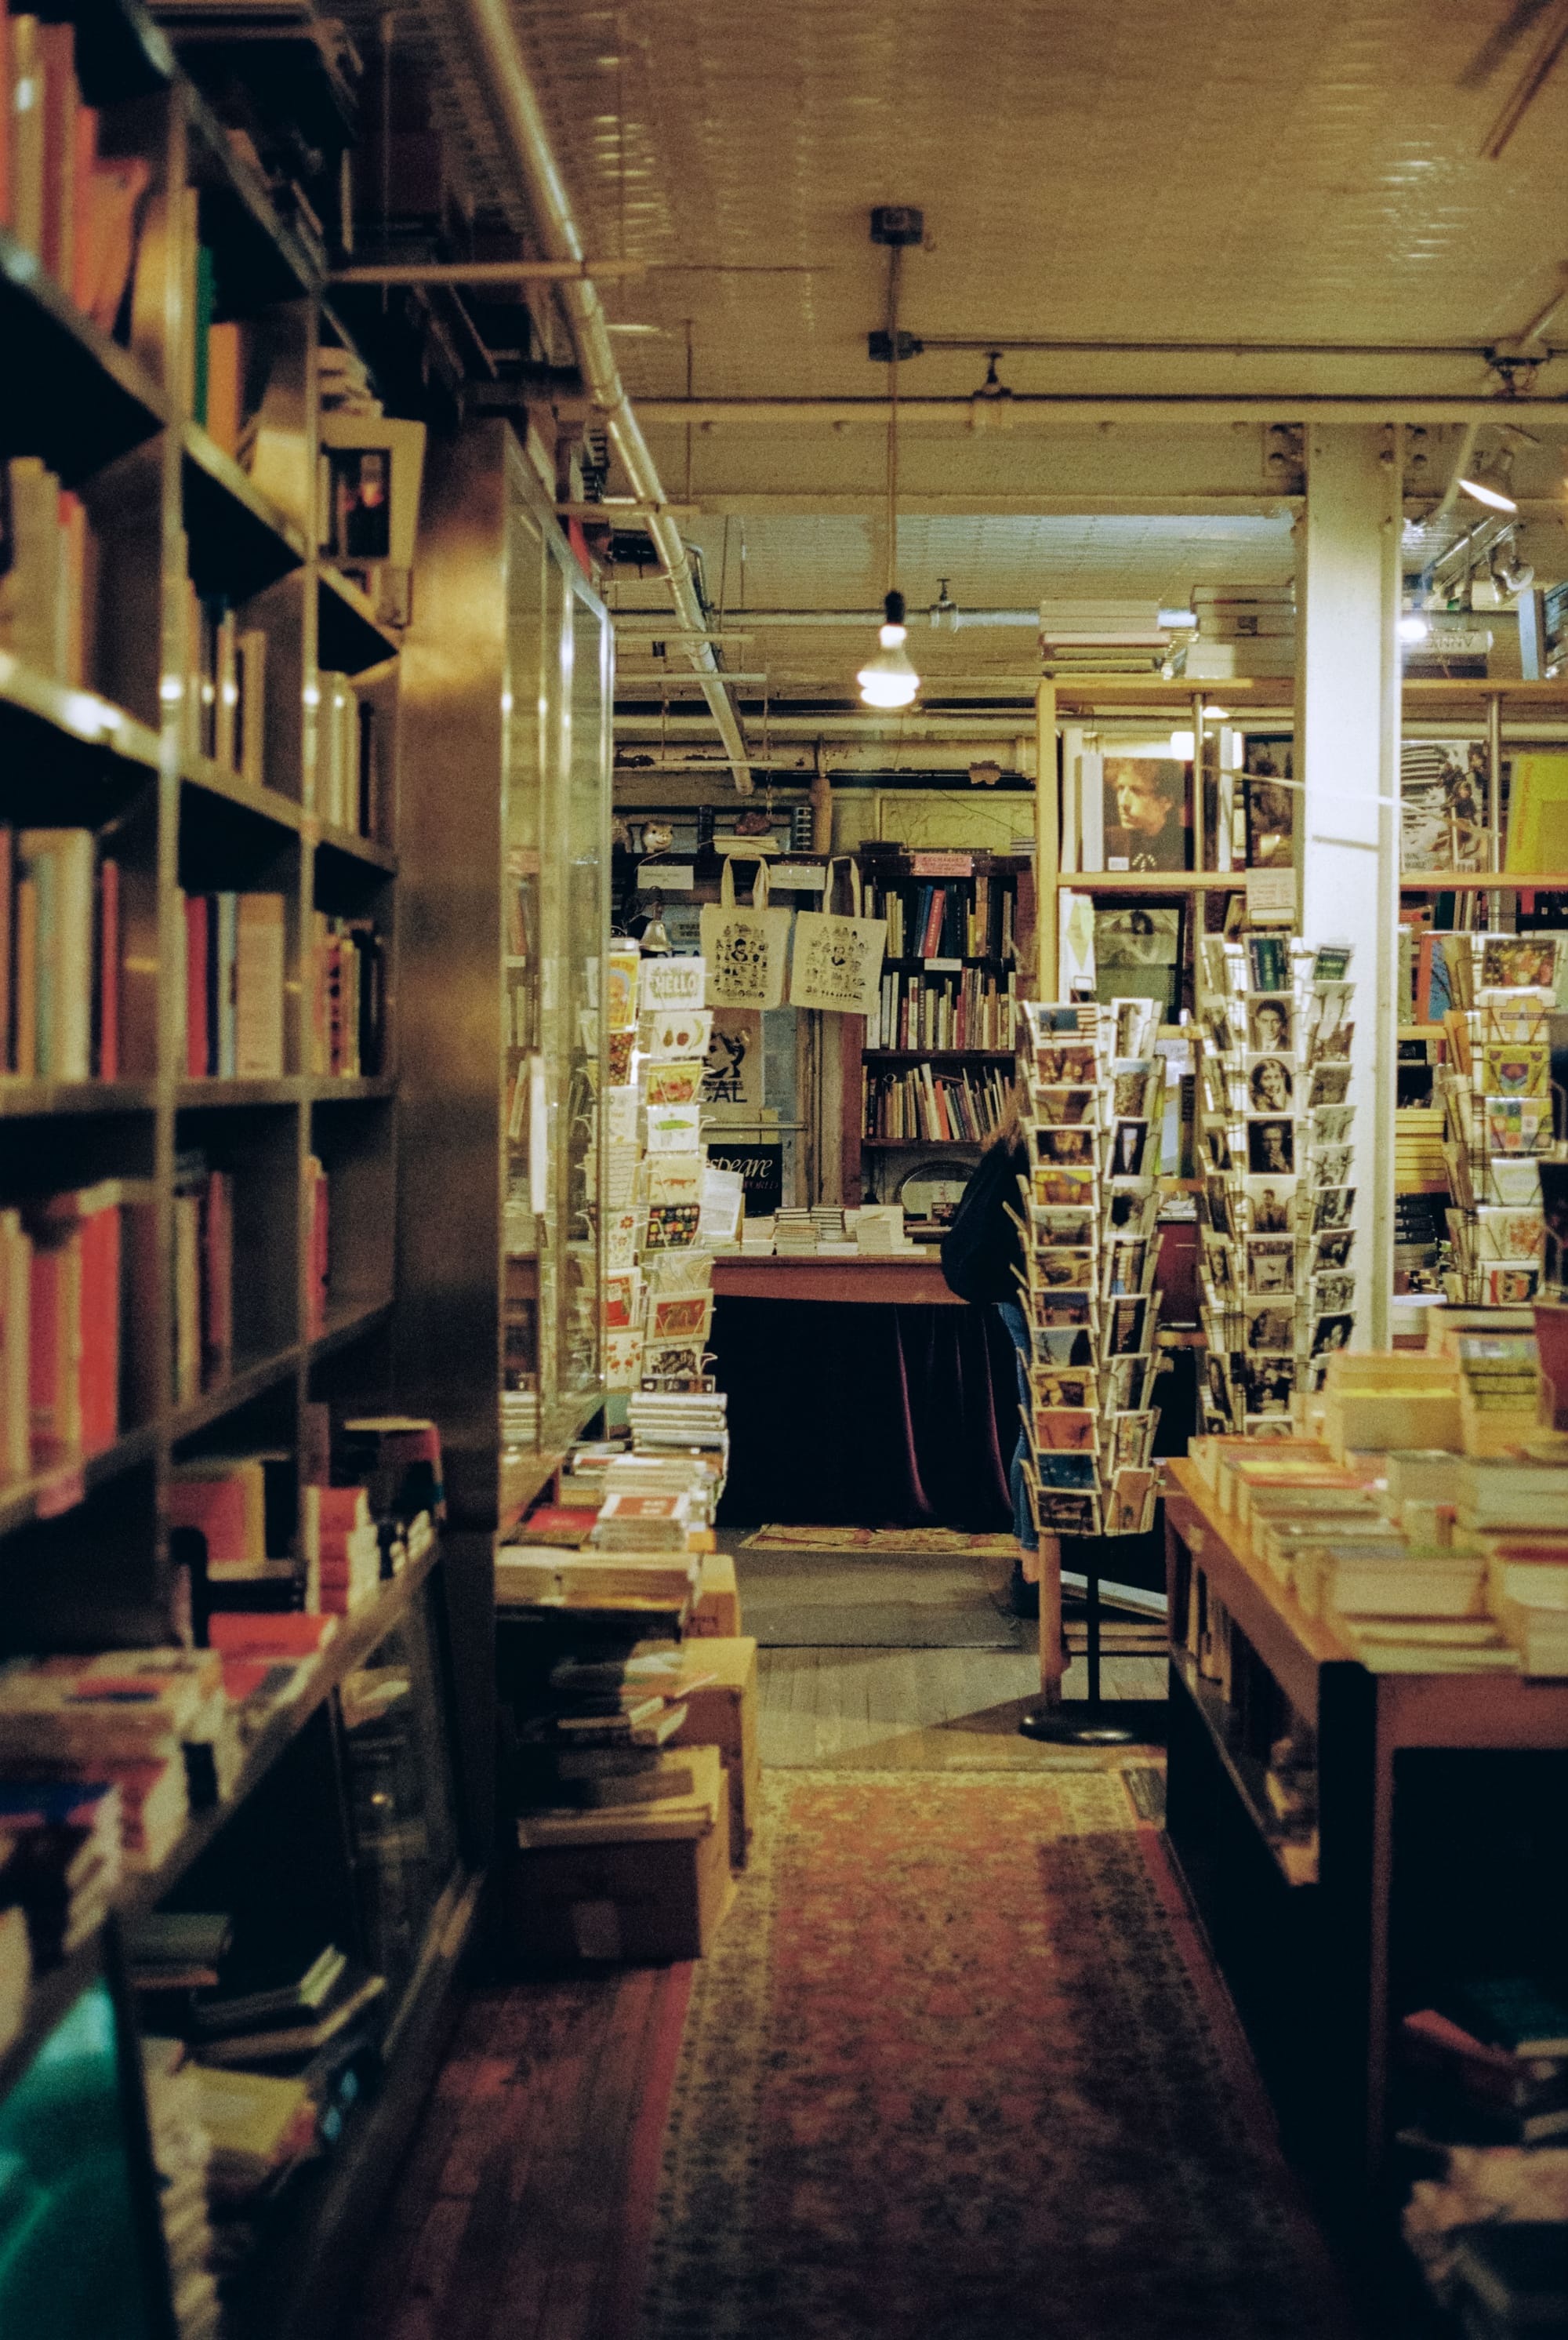 Book Shop